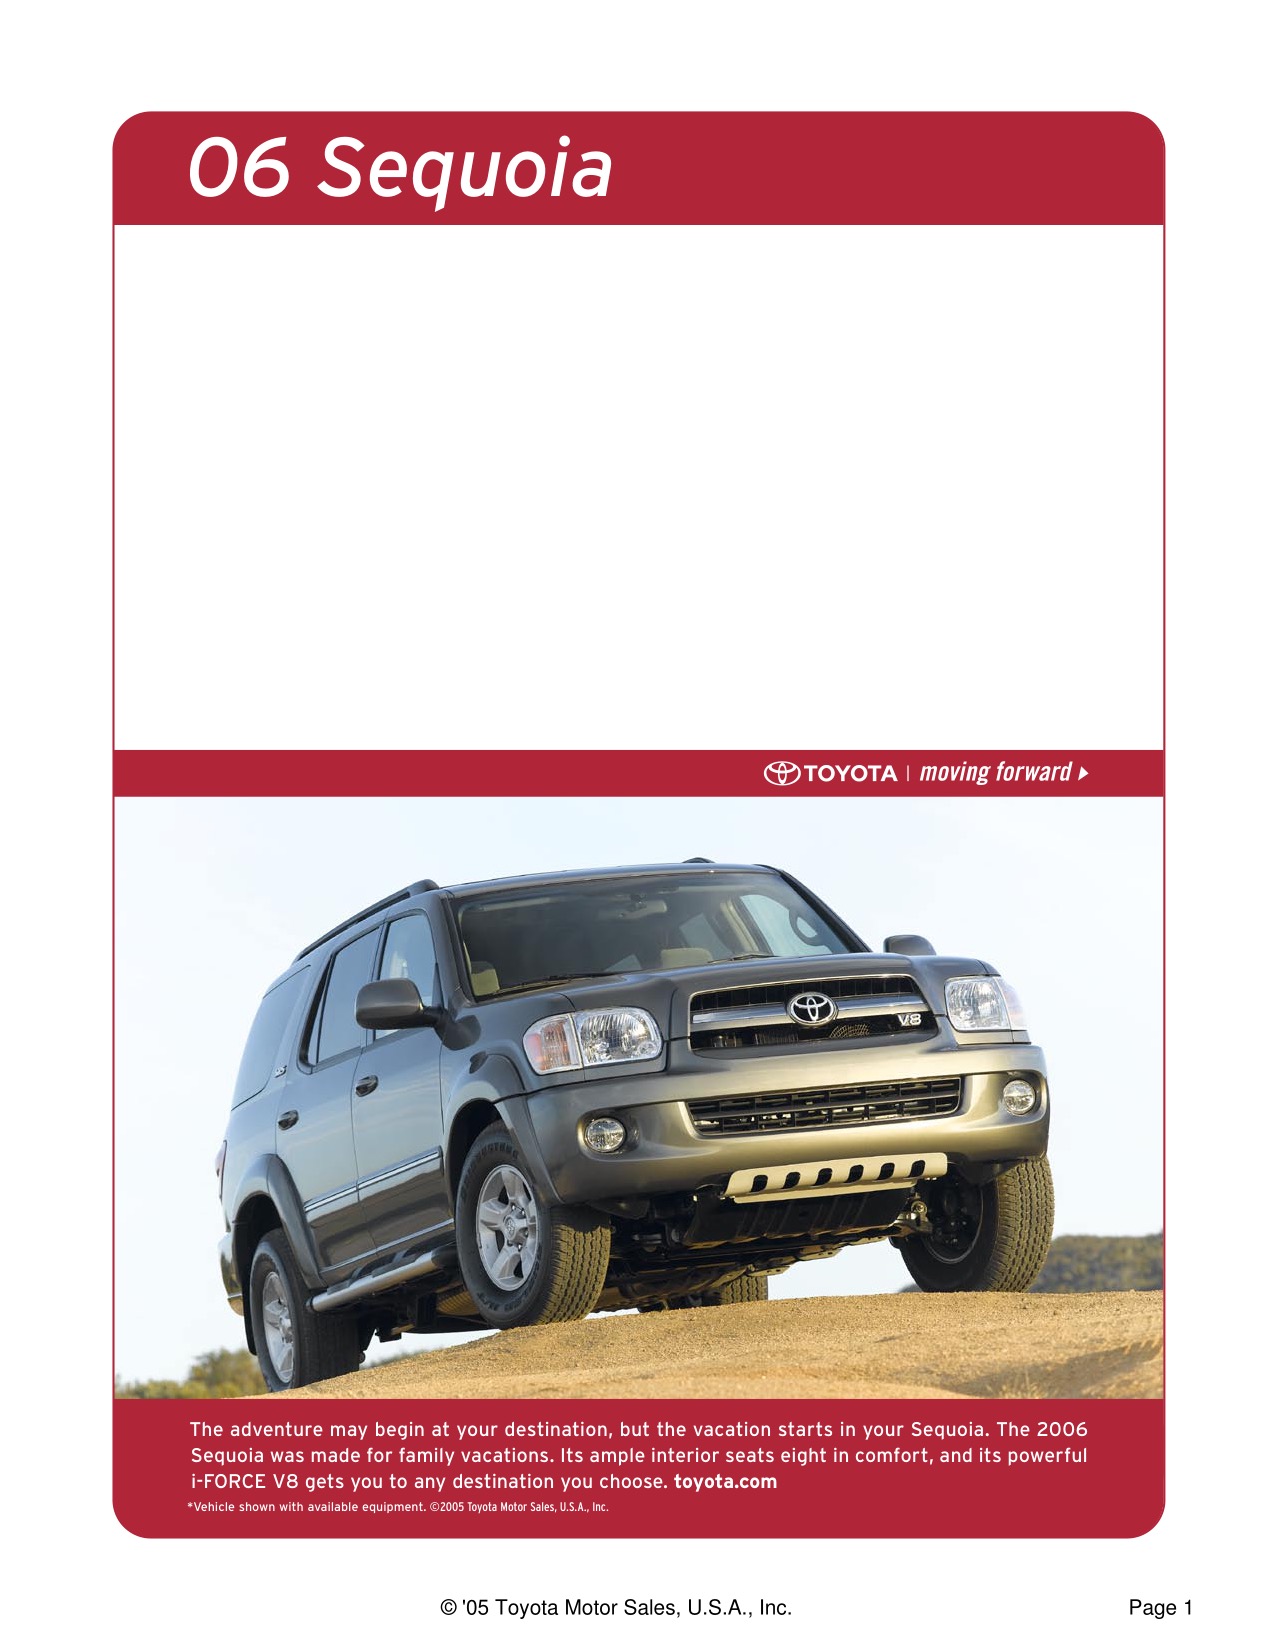 2006 Toyota Sequoia Brochure